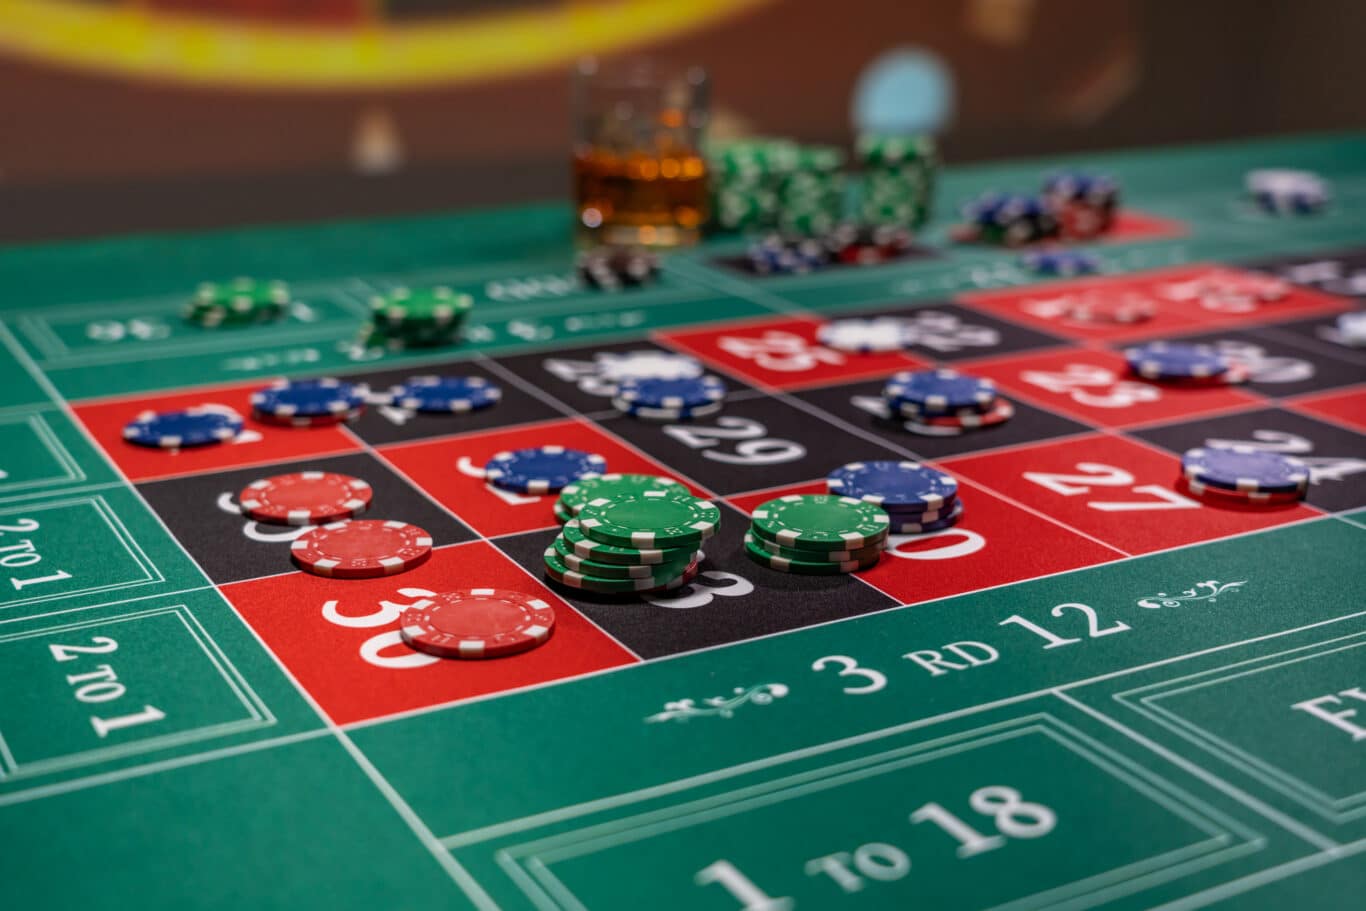 roulette table at the casino 2021 08 31 09 43 52 utc